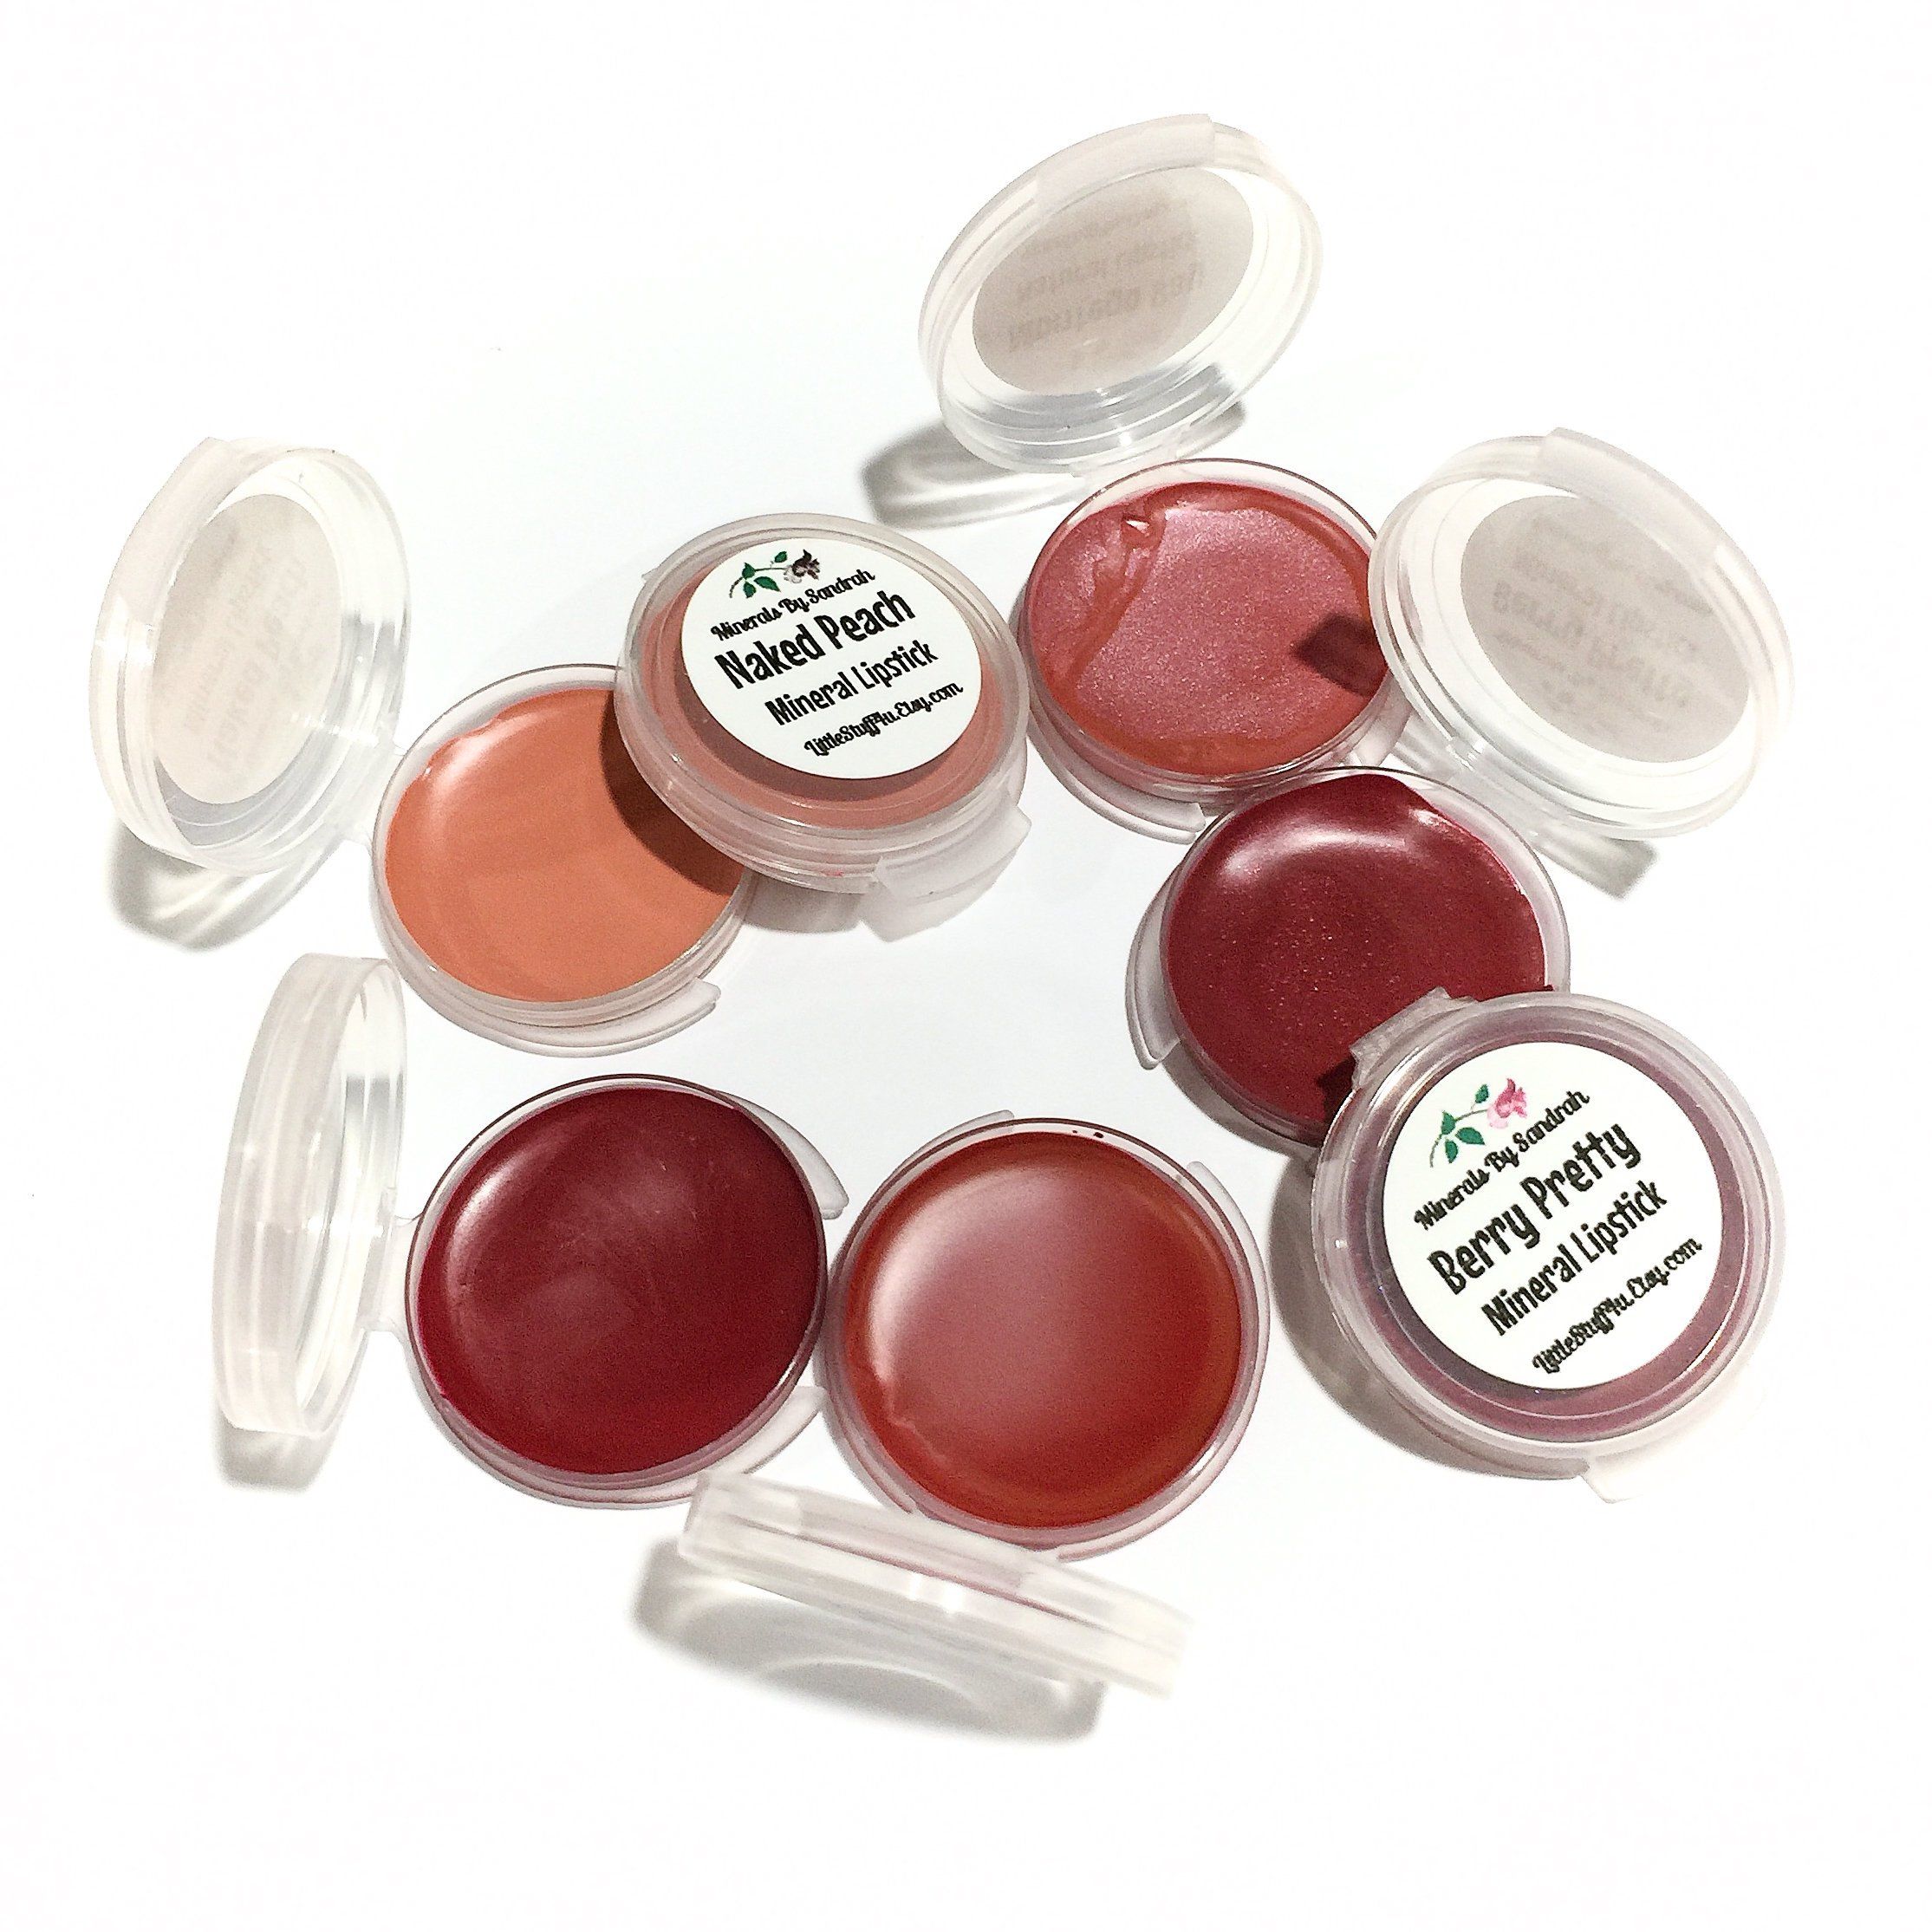 Shea Butter Mineral Lipstick Samples